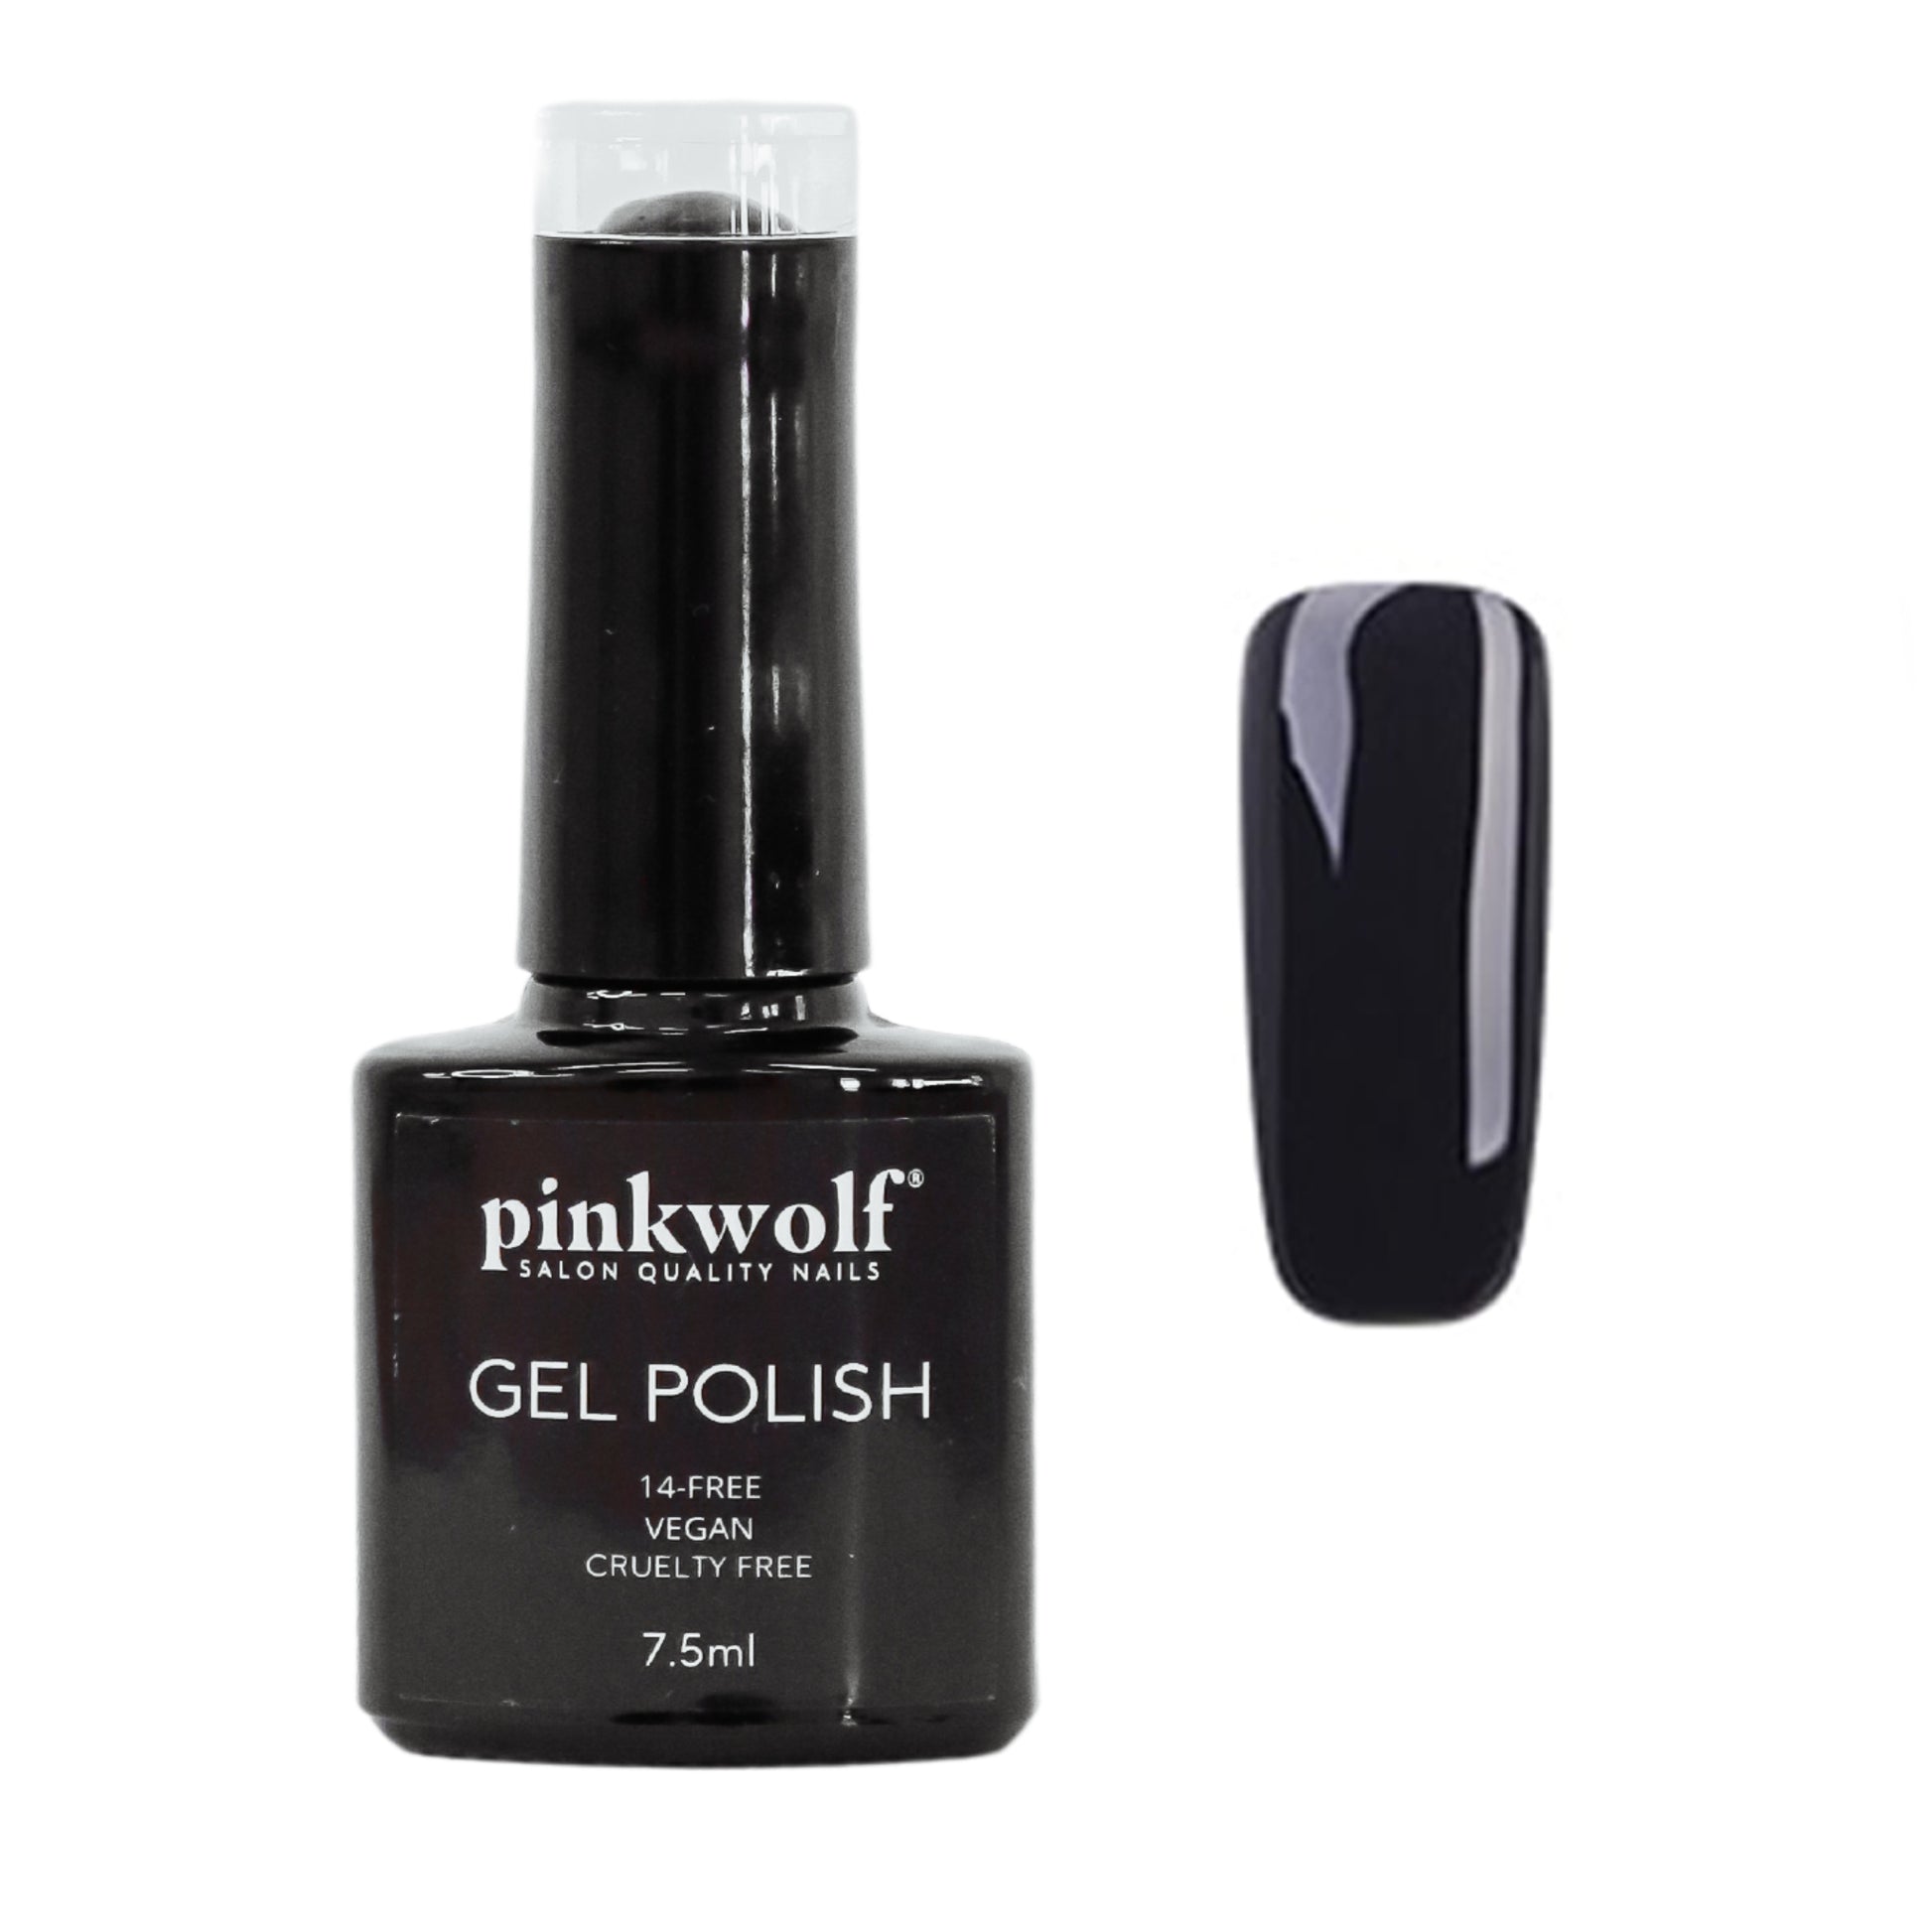 Pinkwolf gel nail polish black 7.5ml bottle